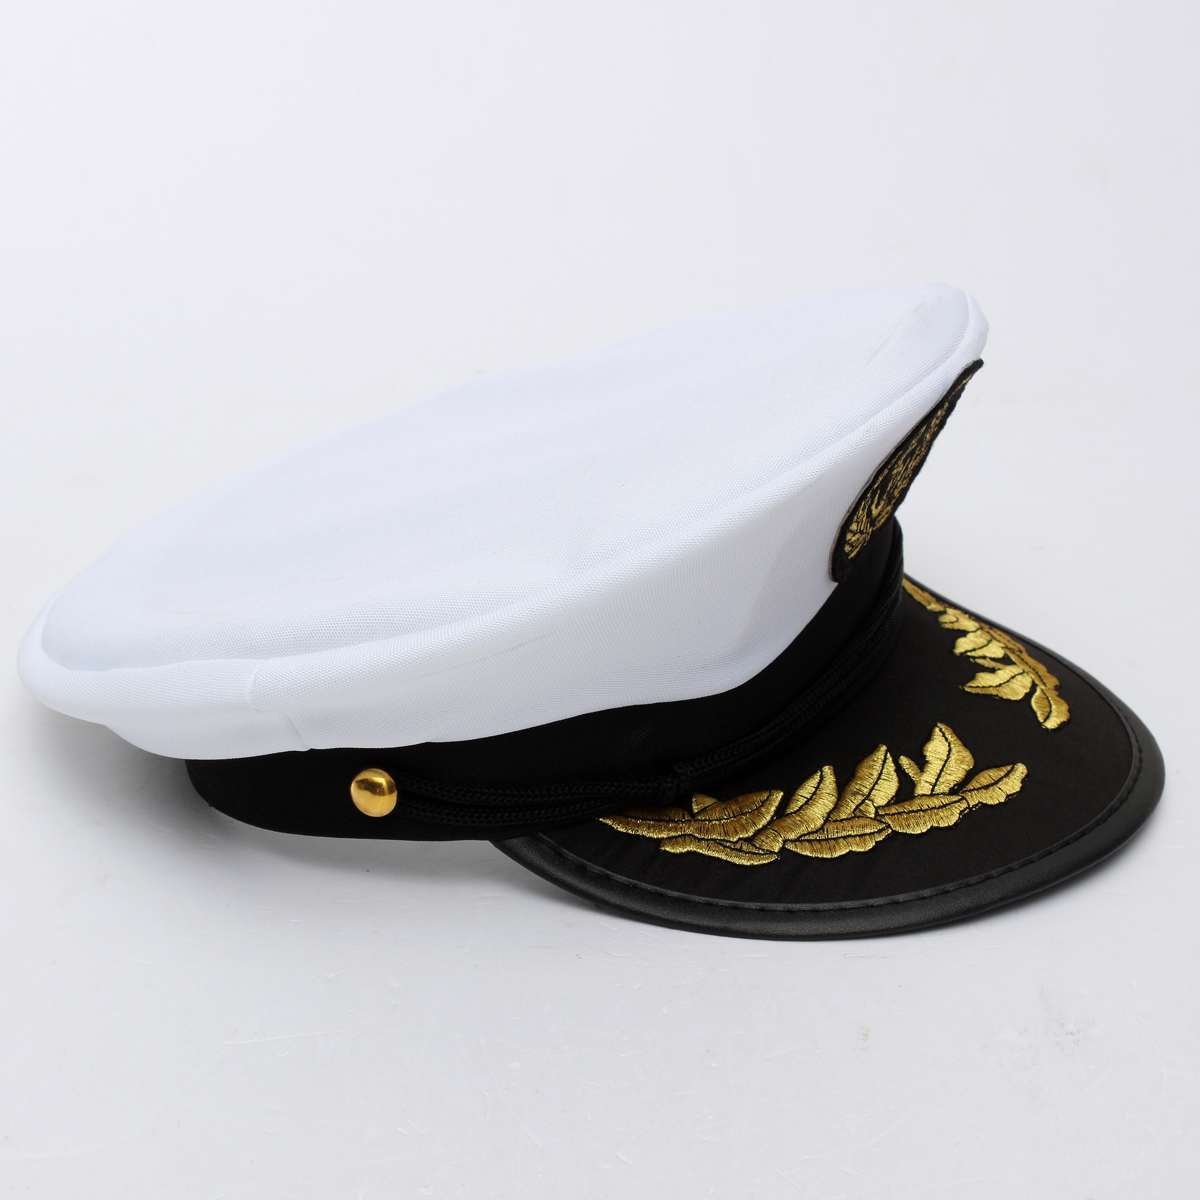 Hvid voksen yacht båd kaptajn hat navy kasket sømand kostume fest kjole tøj kostume fest cosplay kjole sømand hat